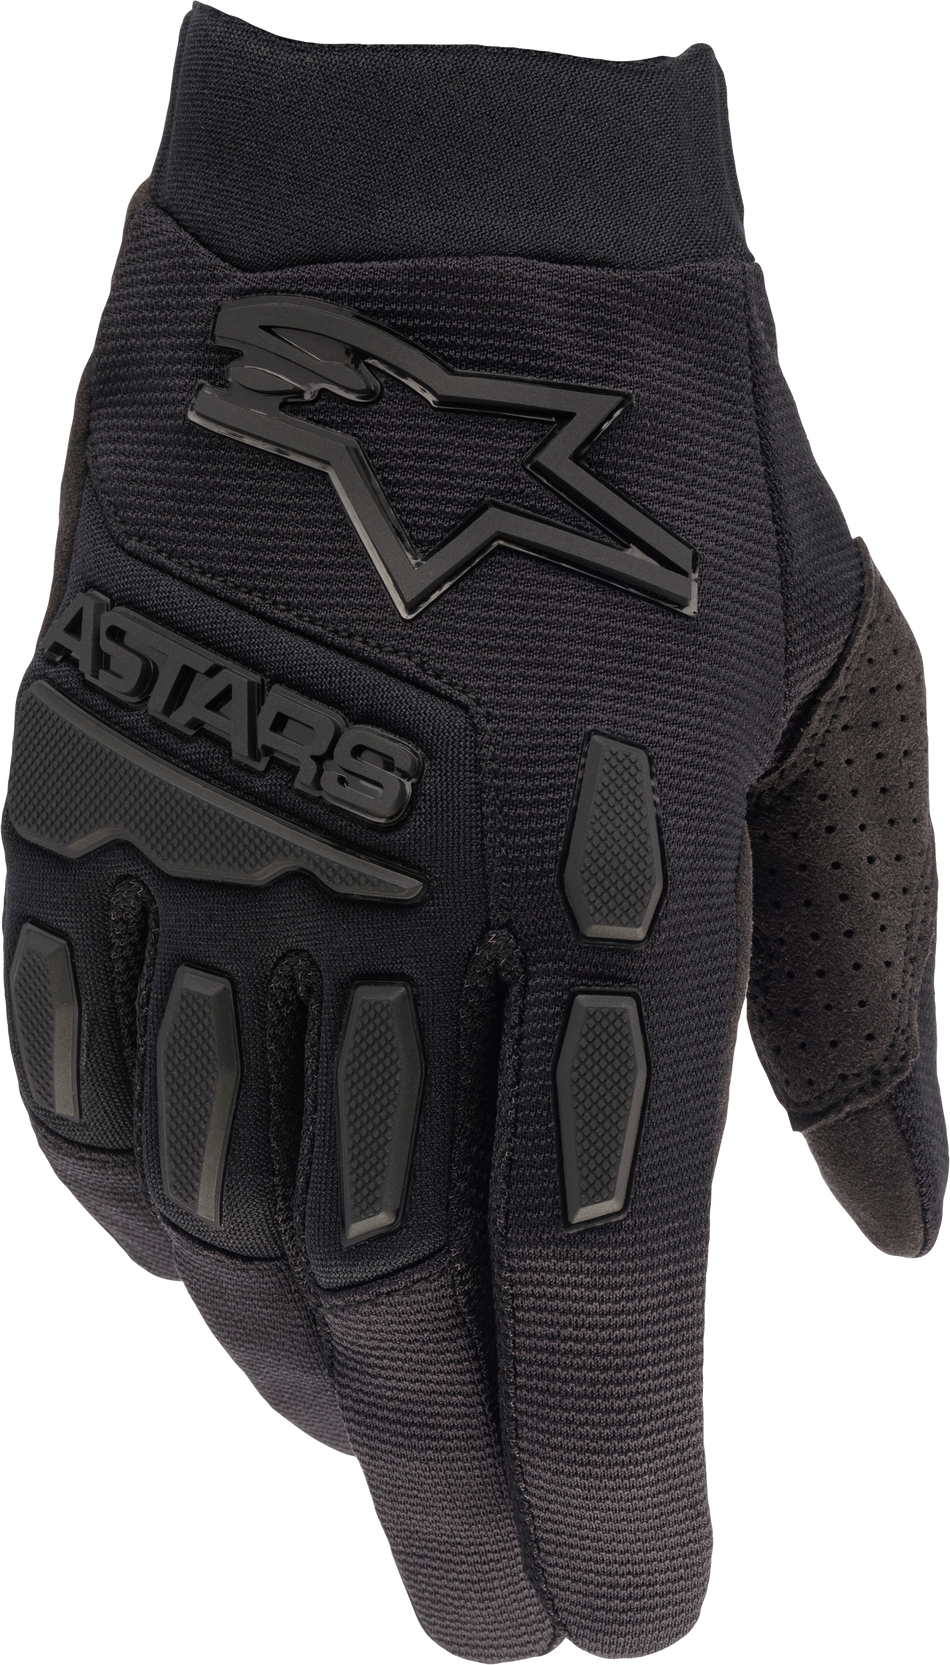 ALPINESTARS Full Bore Gloves Black/Black Md 3563622-1100-M